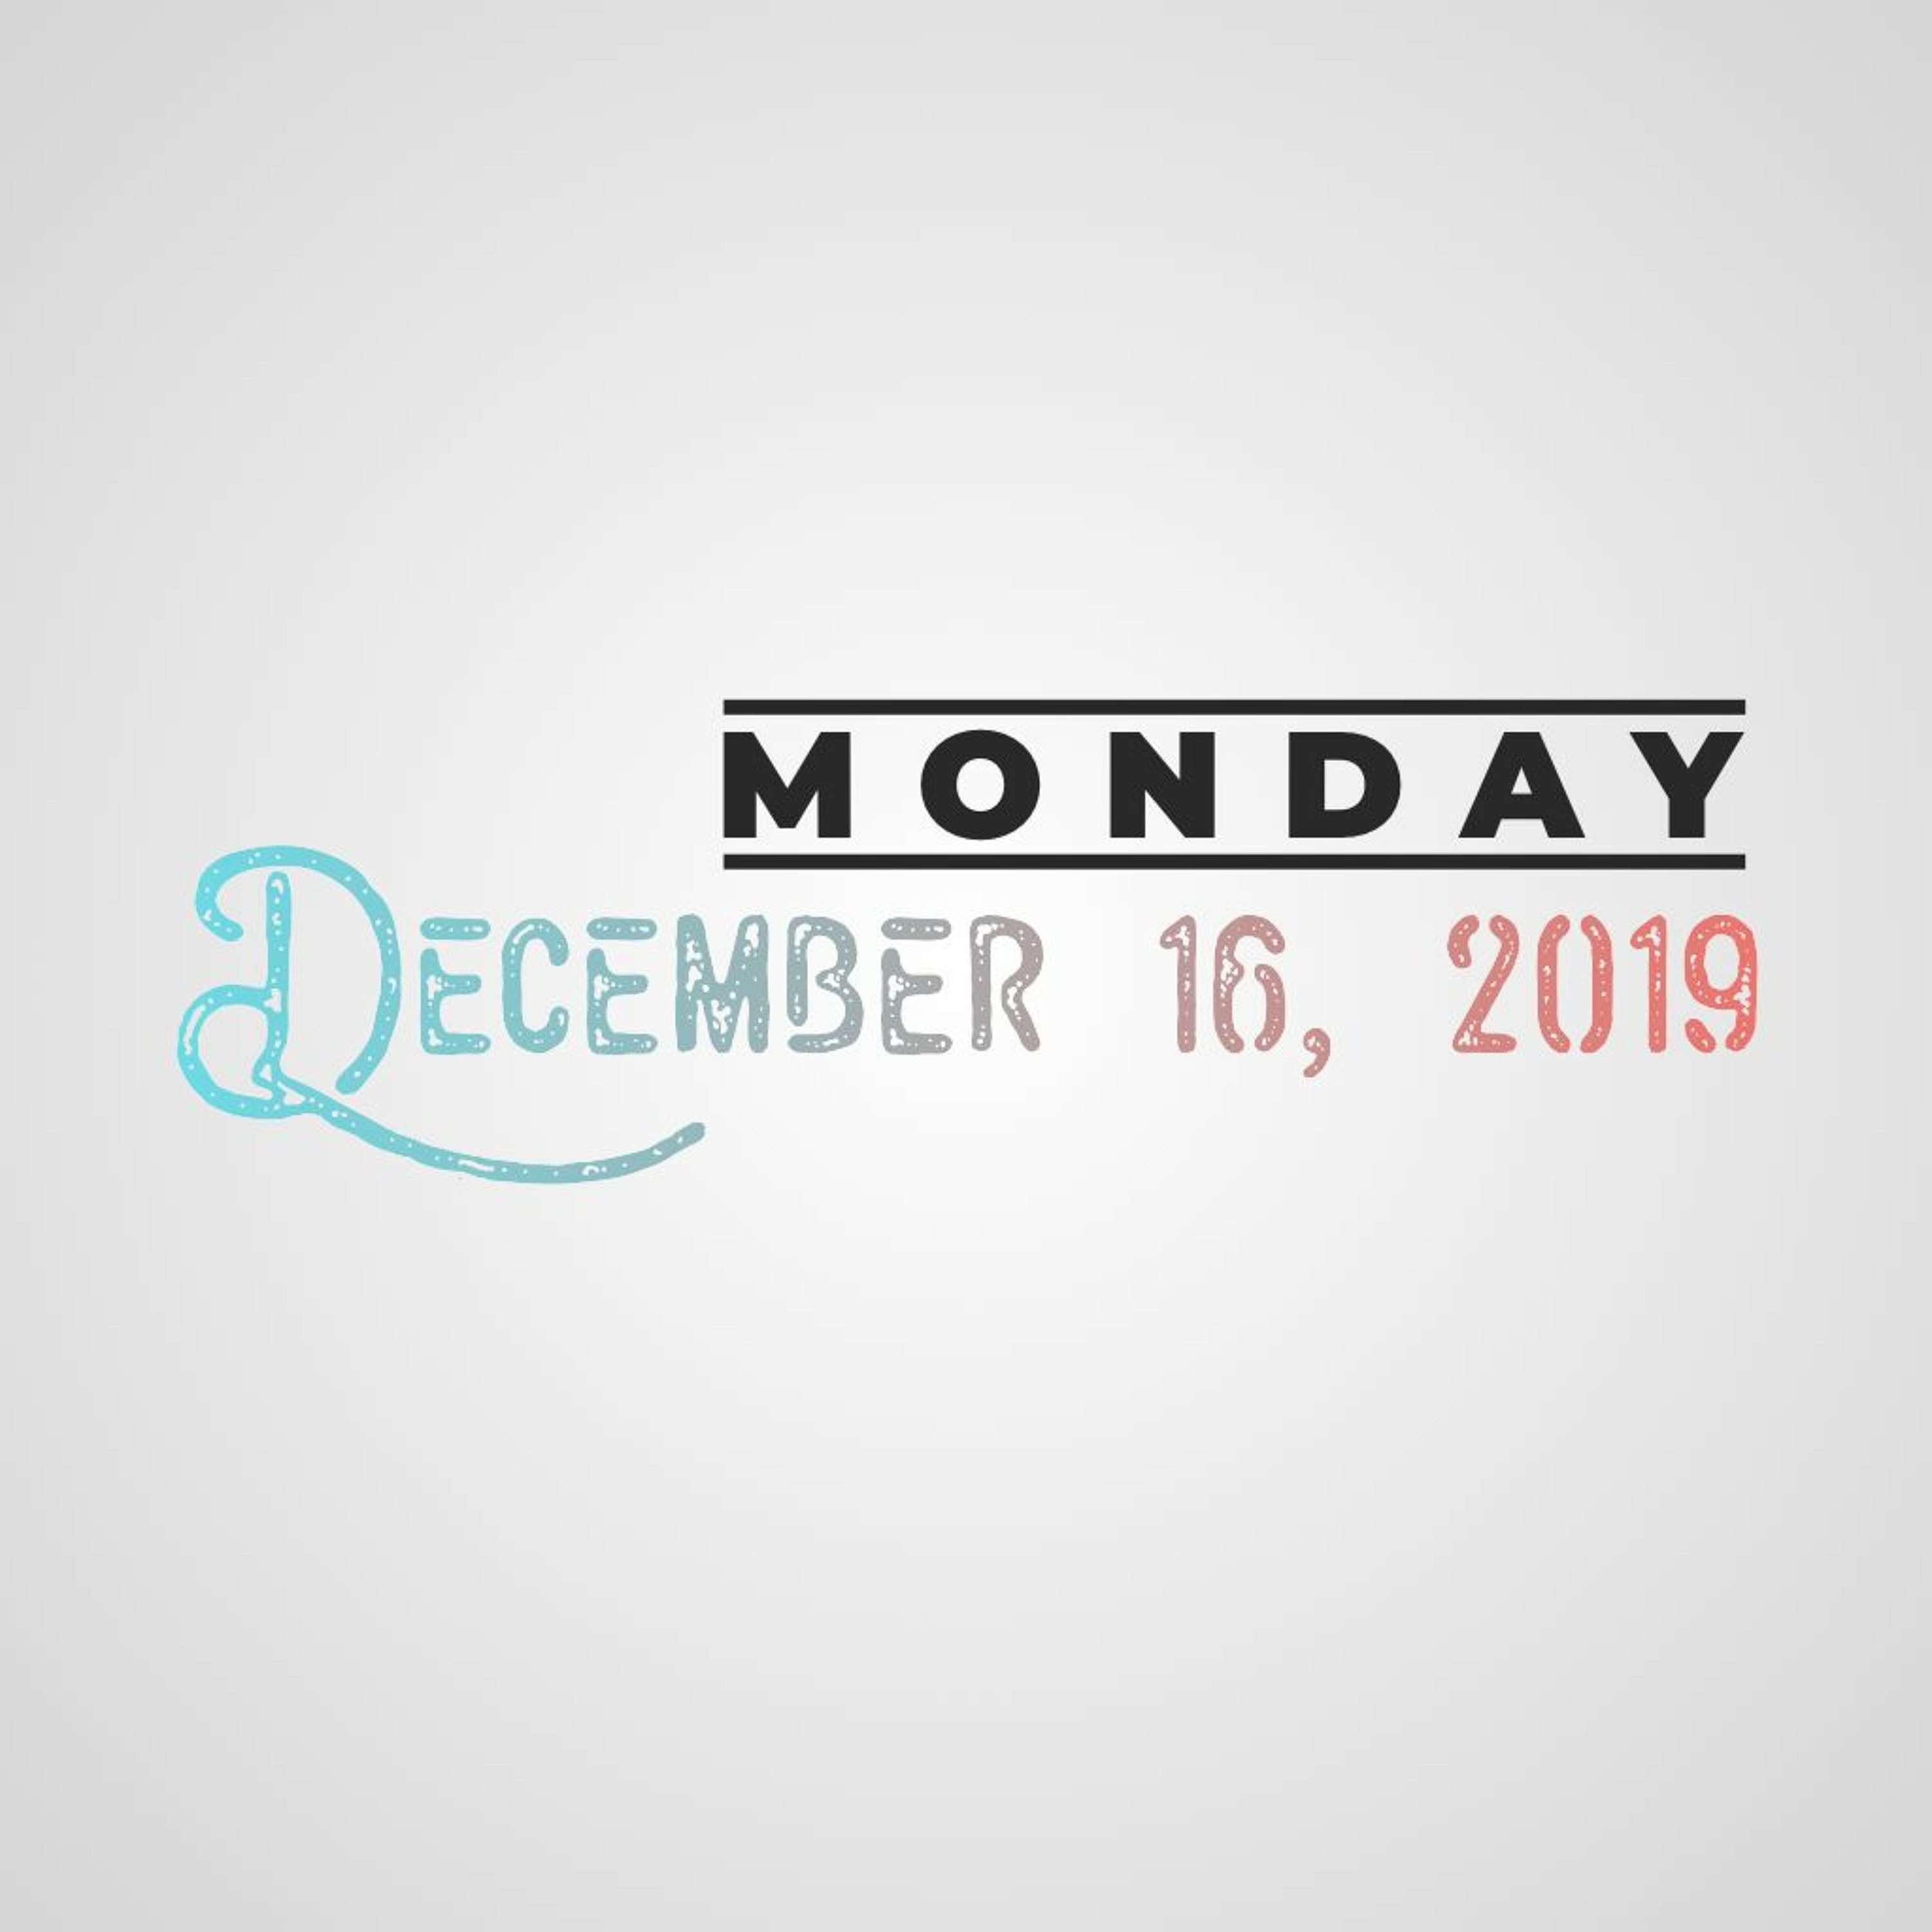 Monday, December 16, 2019